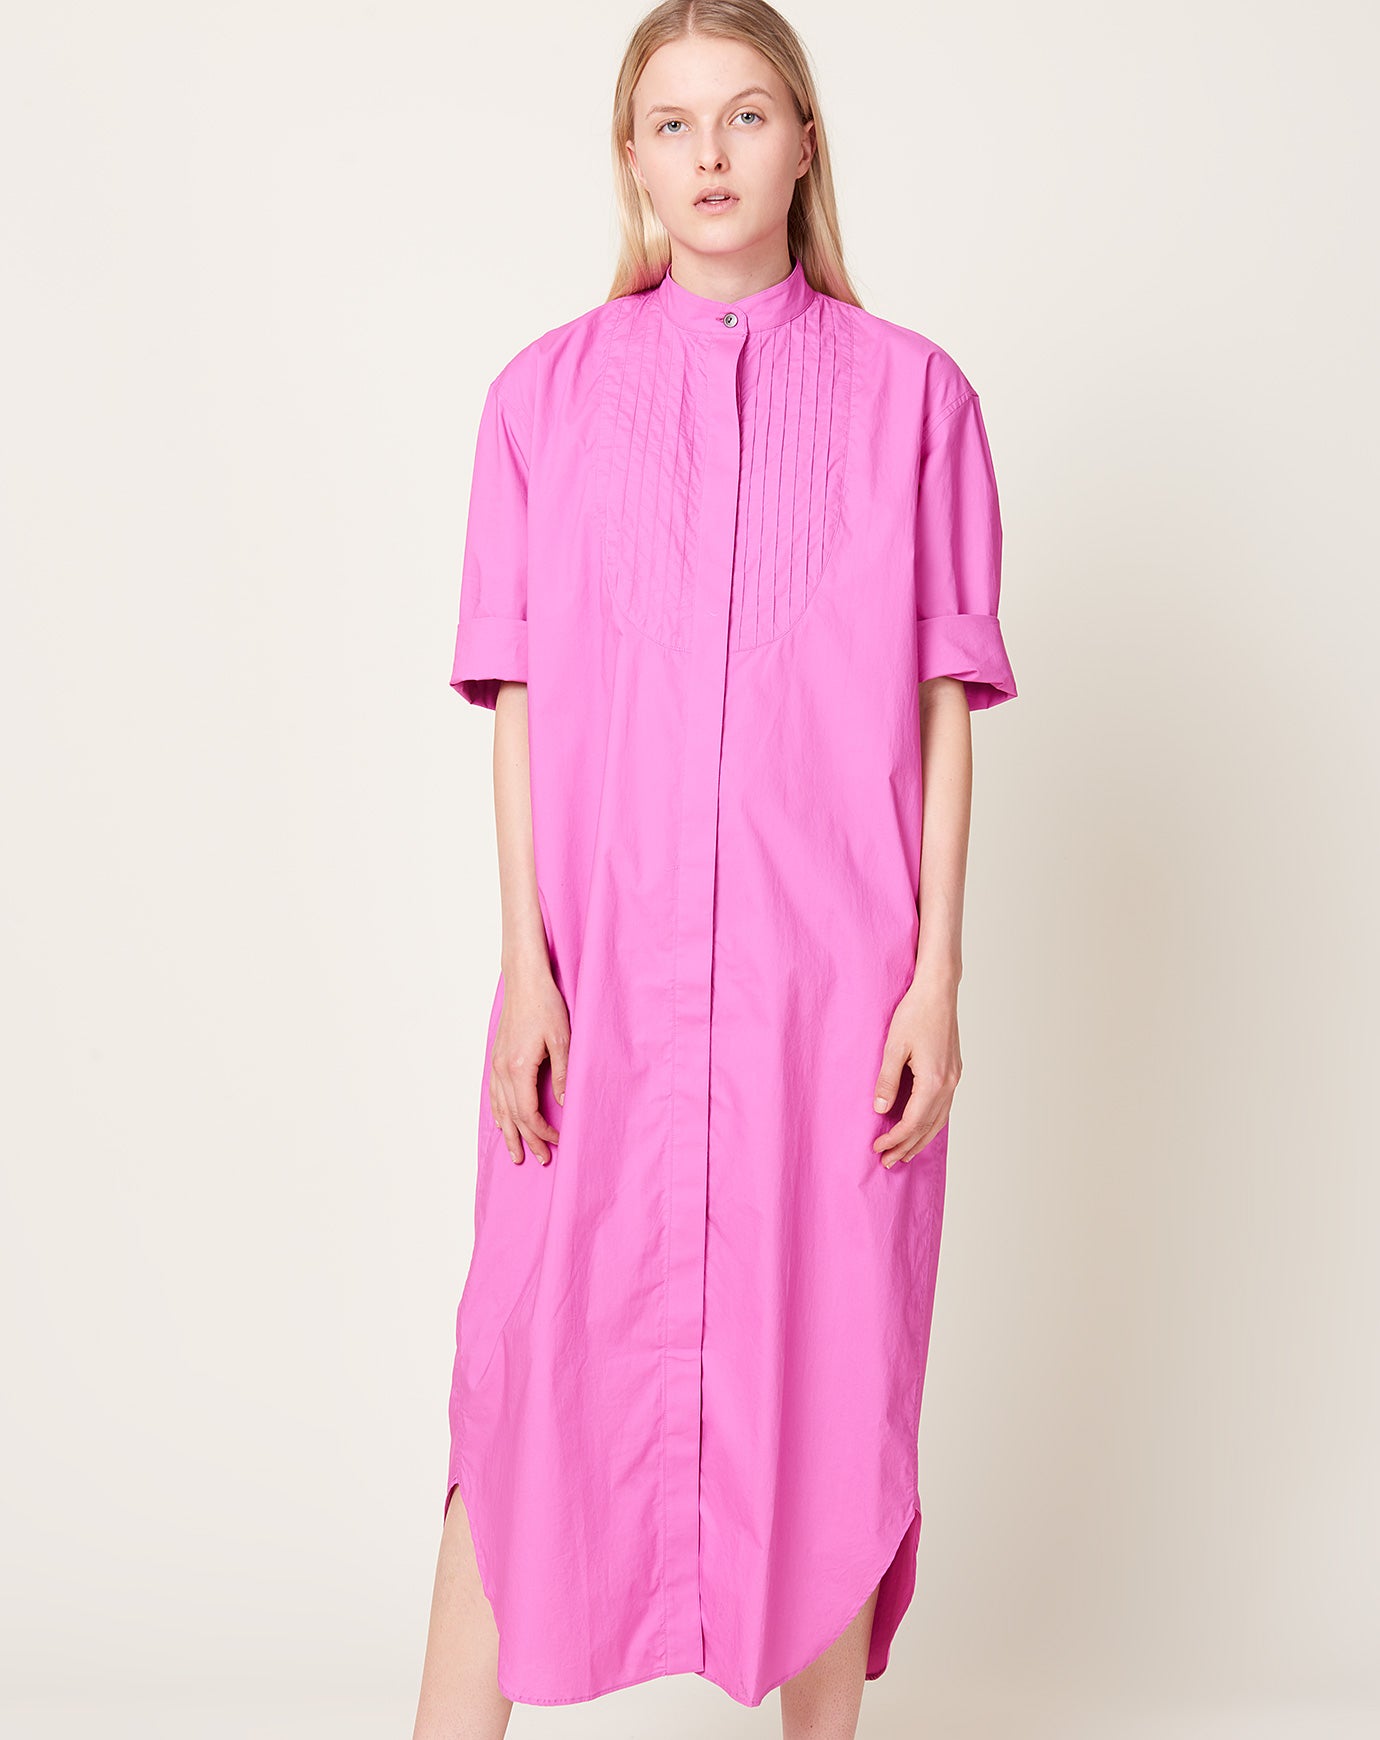 Maria McManus Banded Collar Dress in Fuschia Pink